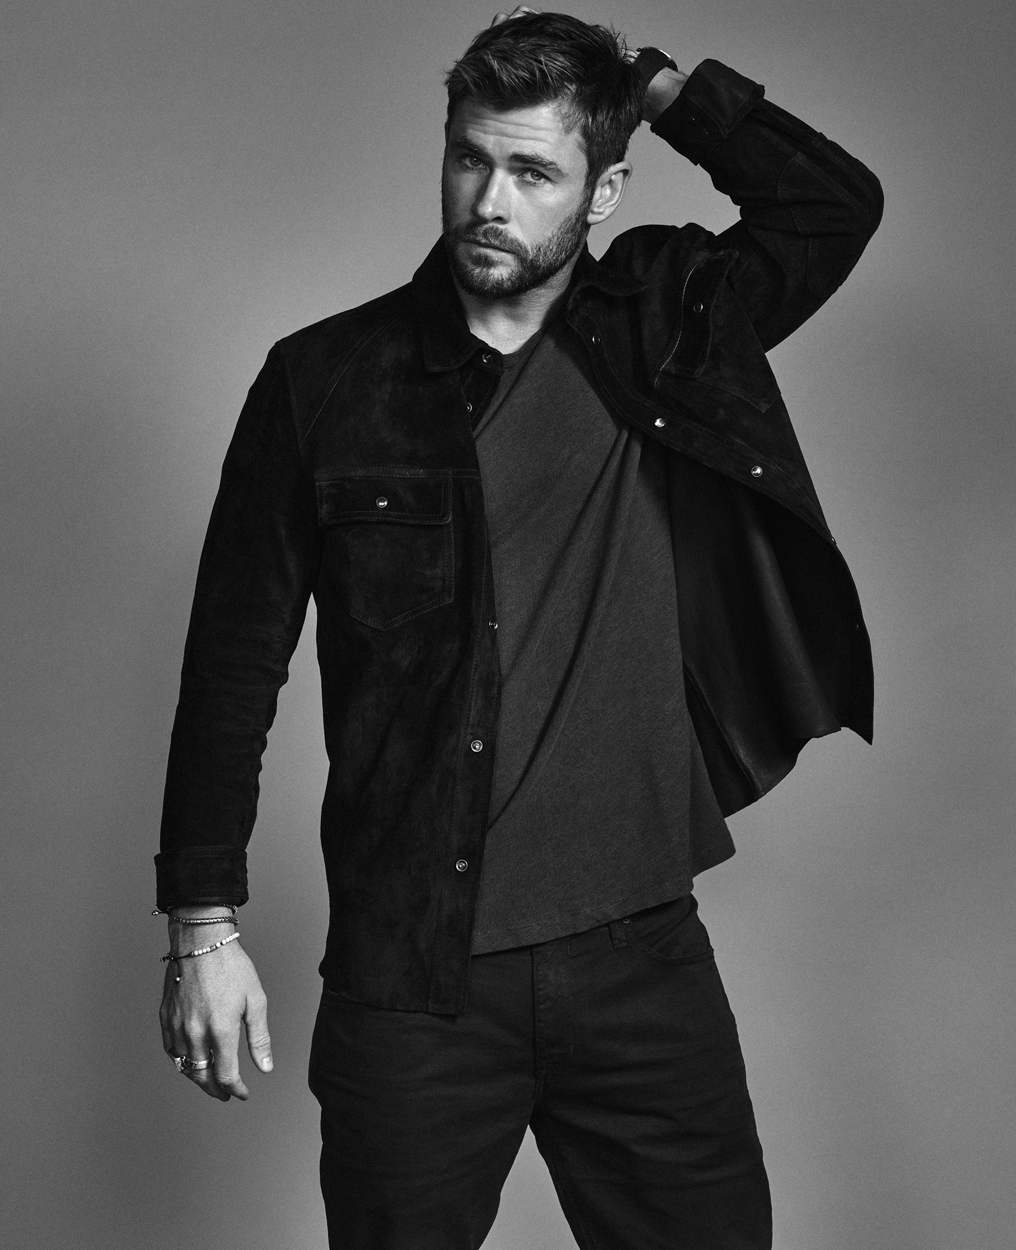 Celebrity Photographer Michael Schwartz: Chris Hemsworth for Men